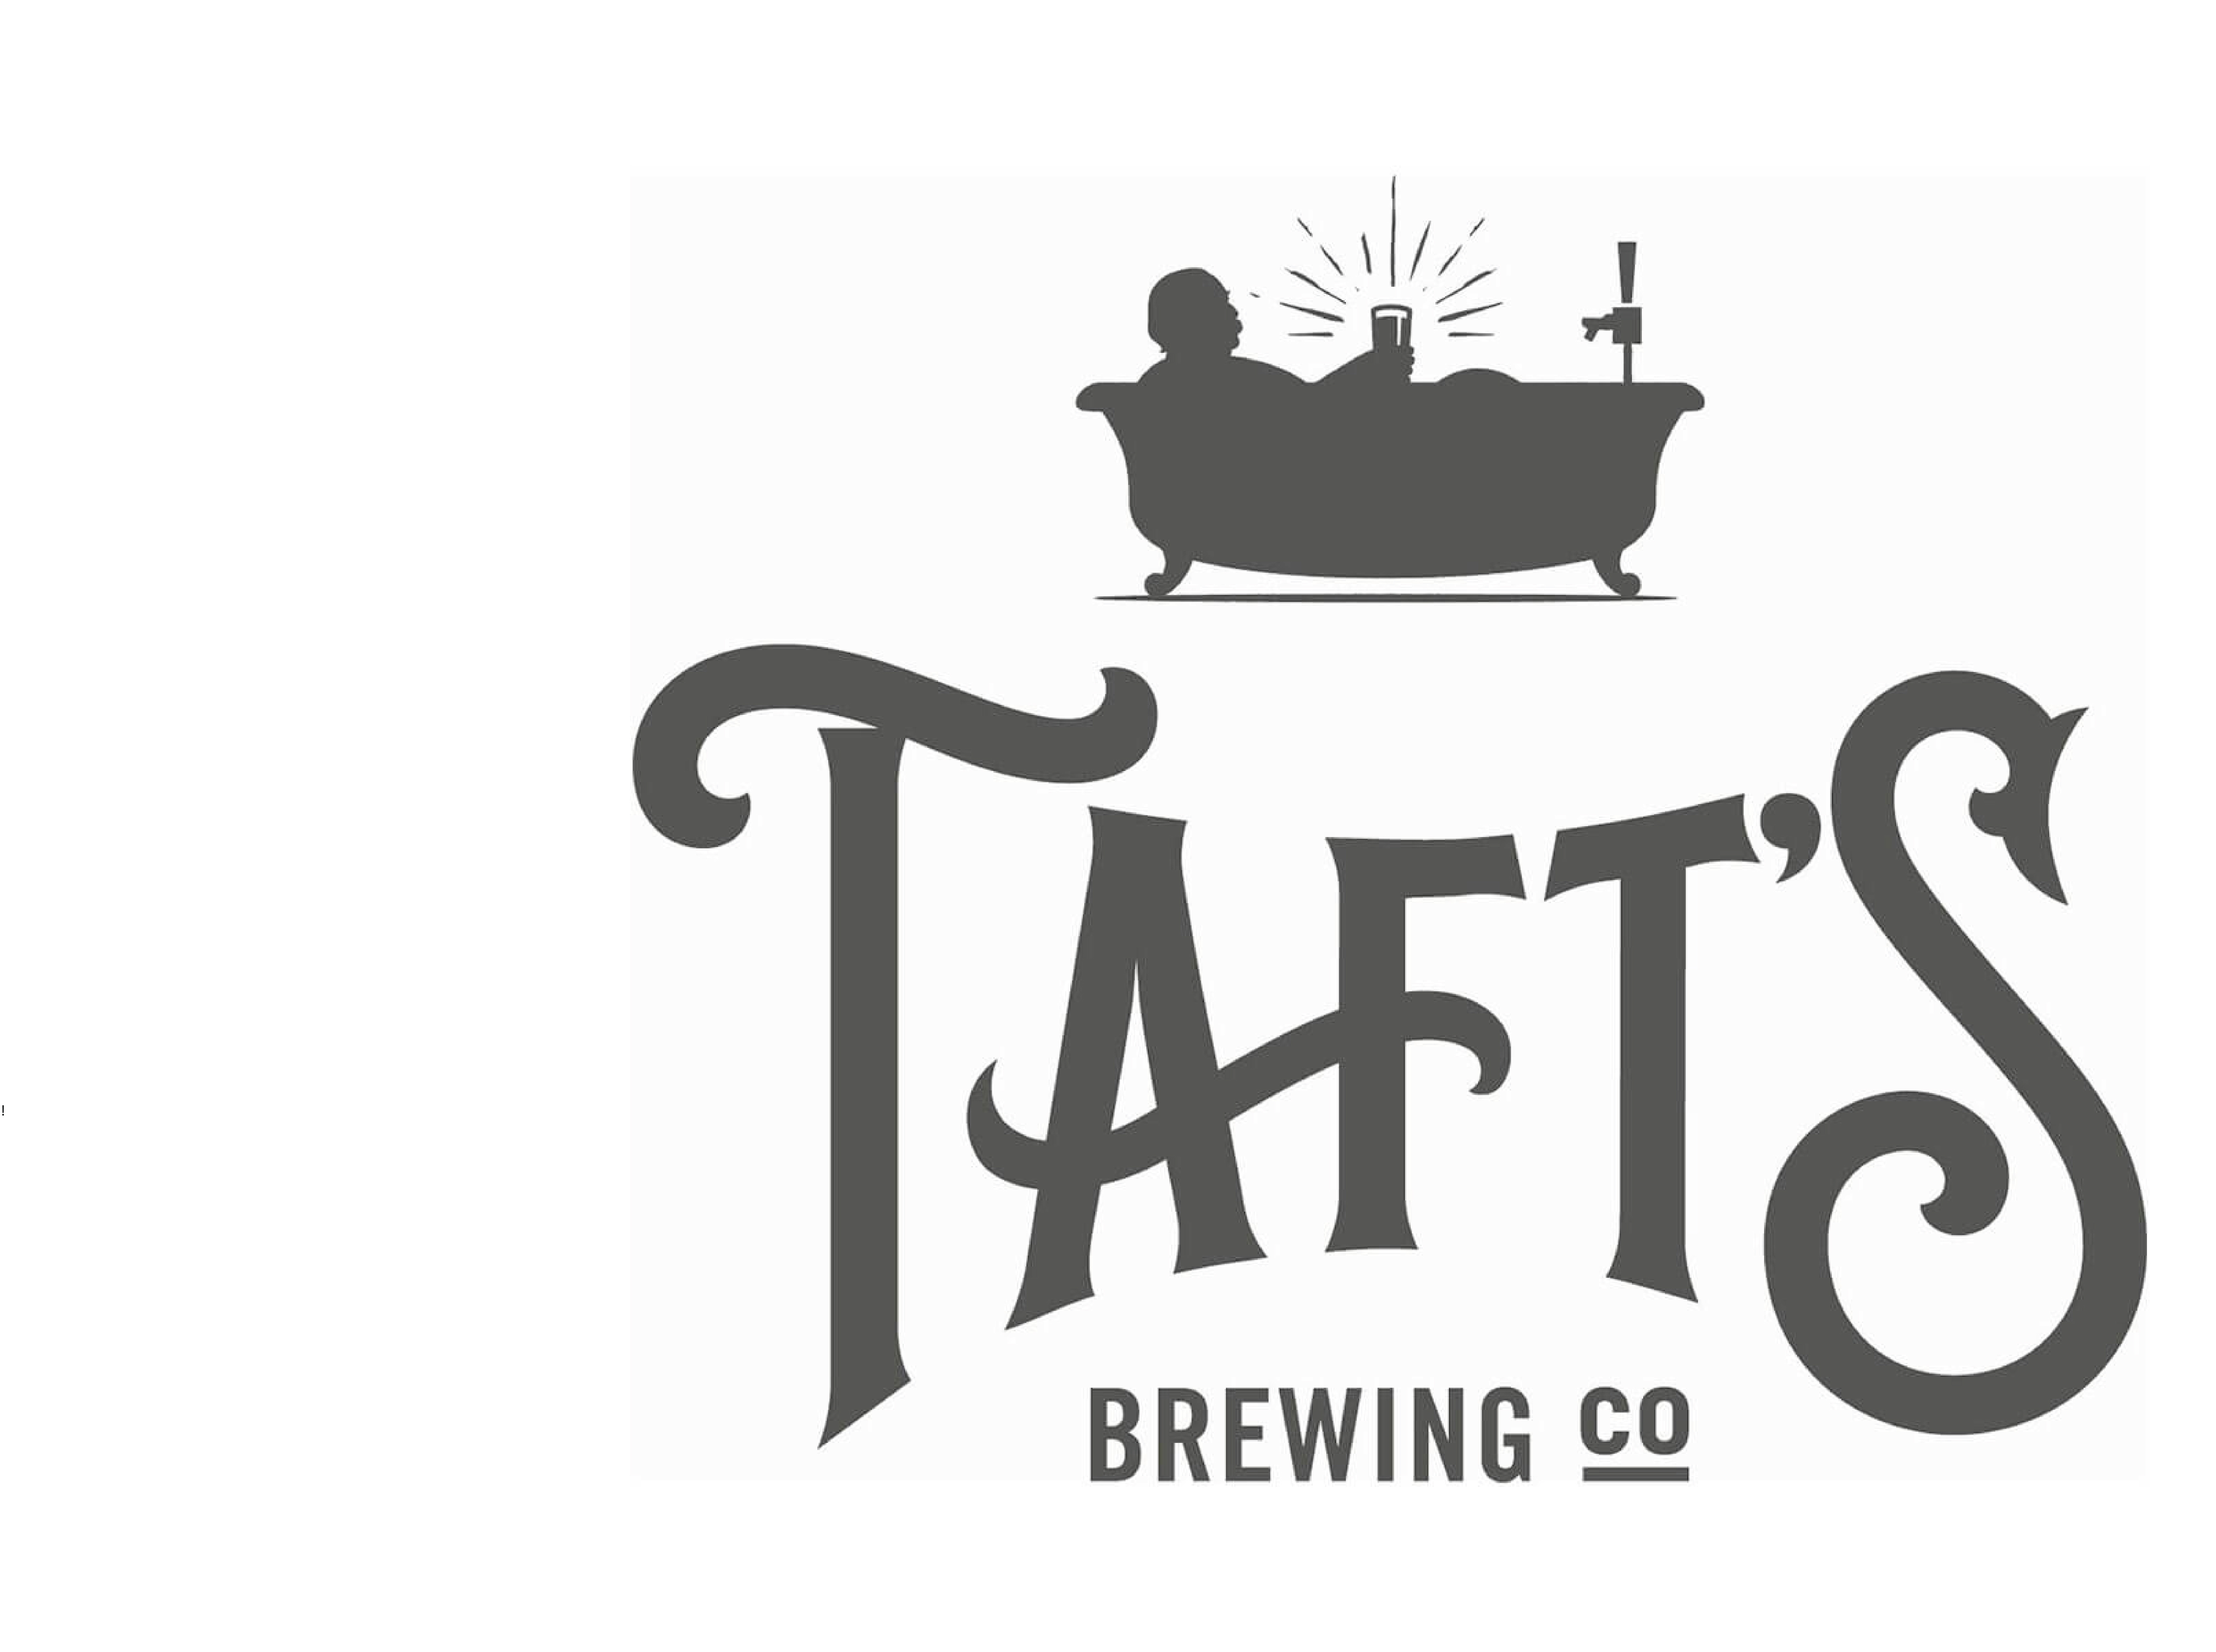 Taft's Brewing Co